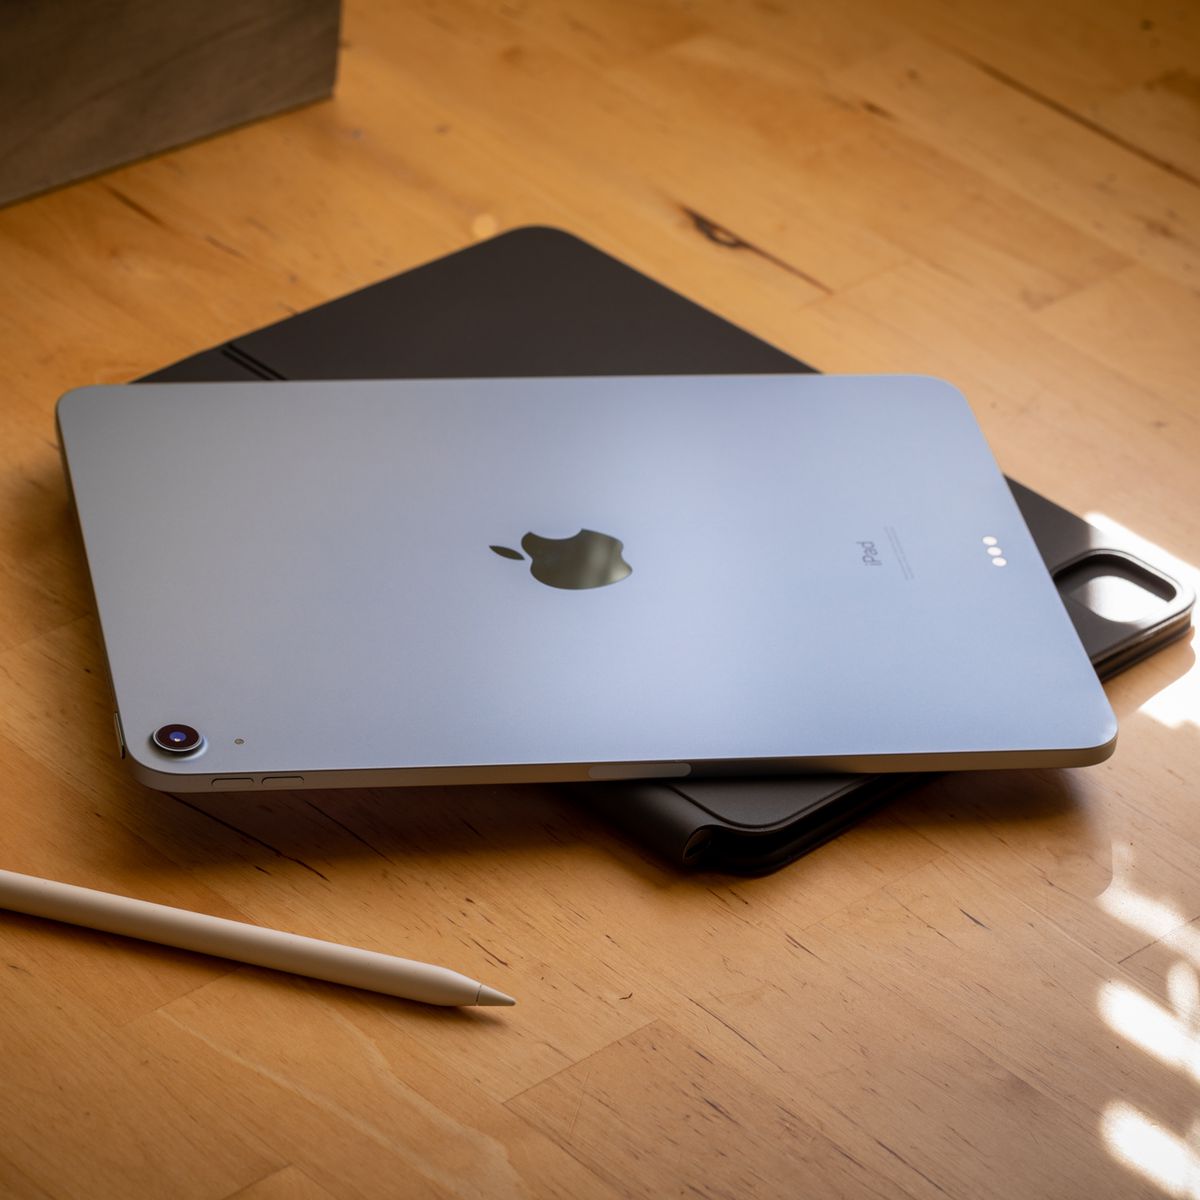 The 2020 iPad Air and new iPad Mini have the same design and shape as the iPad Pro